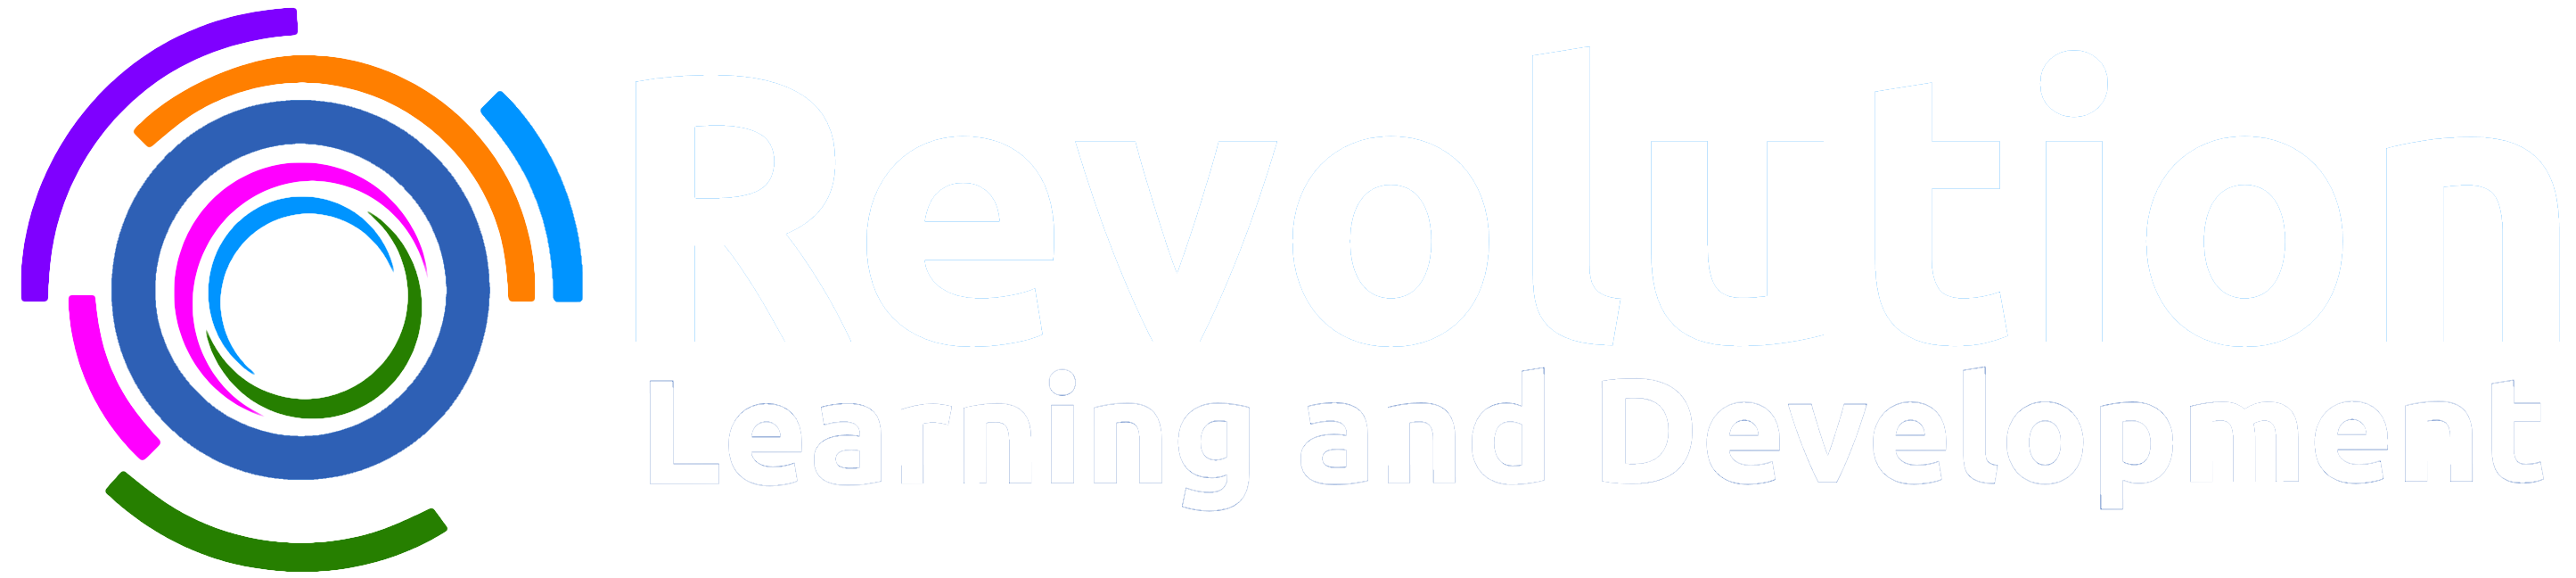 Revolution Learning and Development – Spain